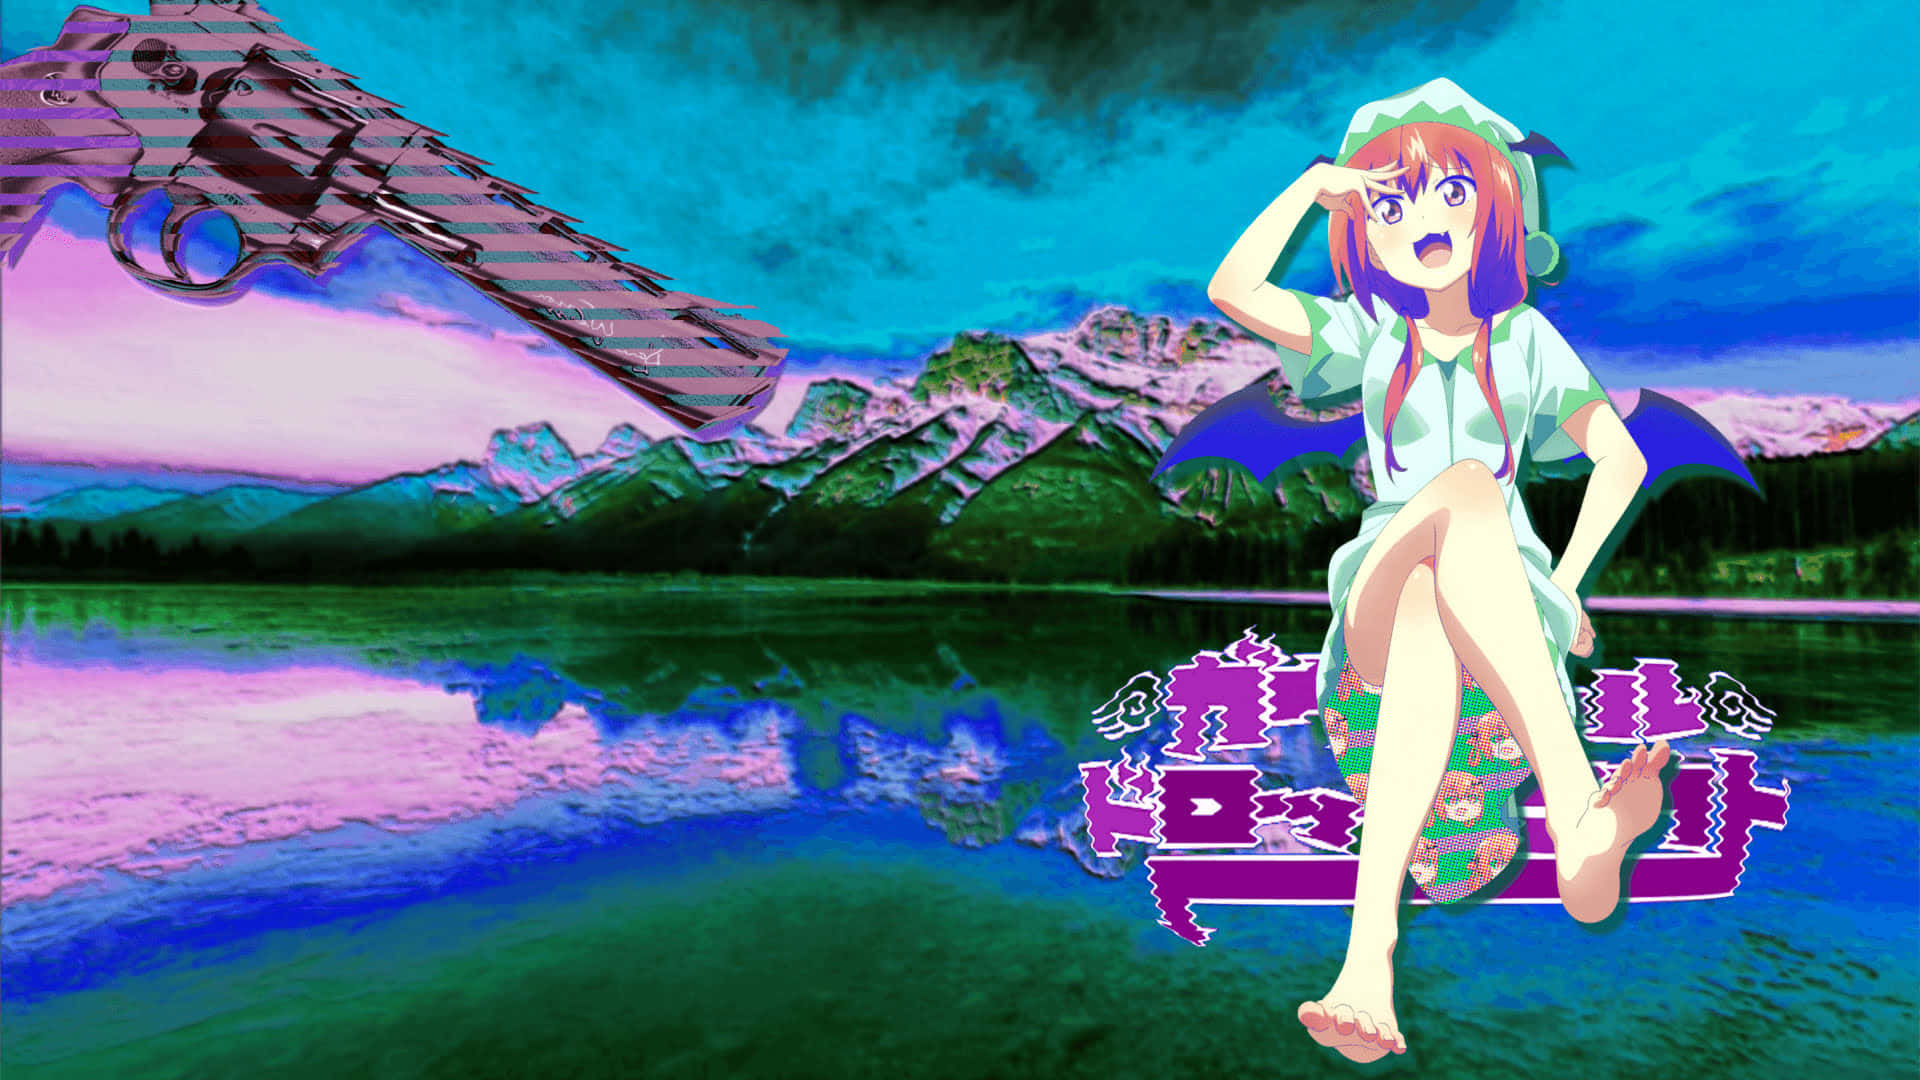 Cyber Y2 K Anime Character Lakeside Wallpaper